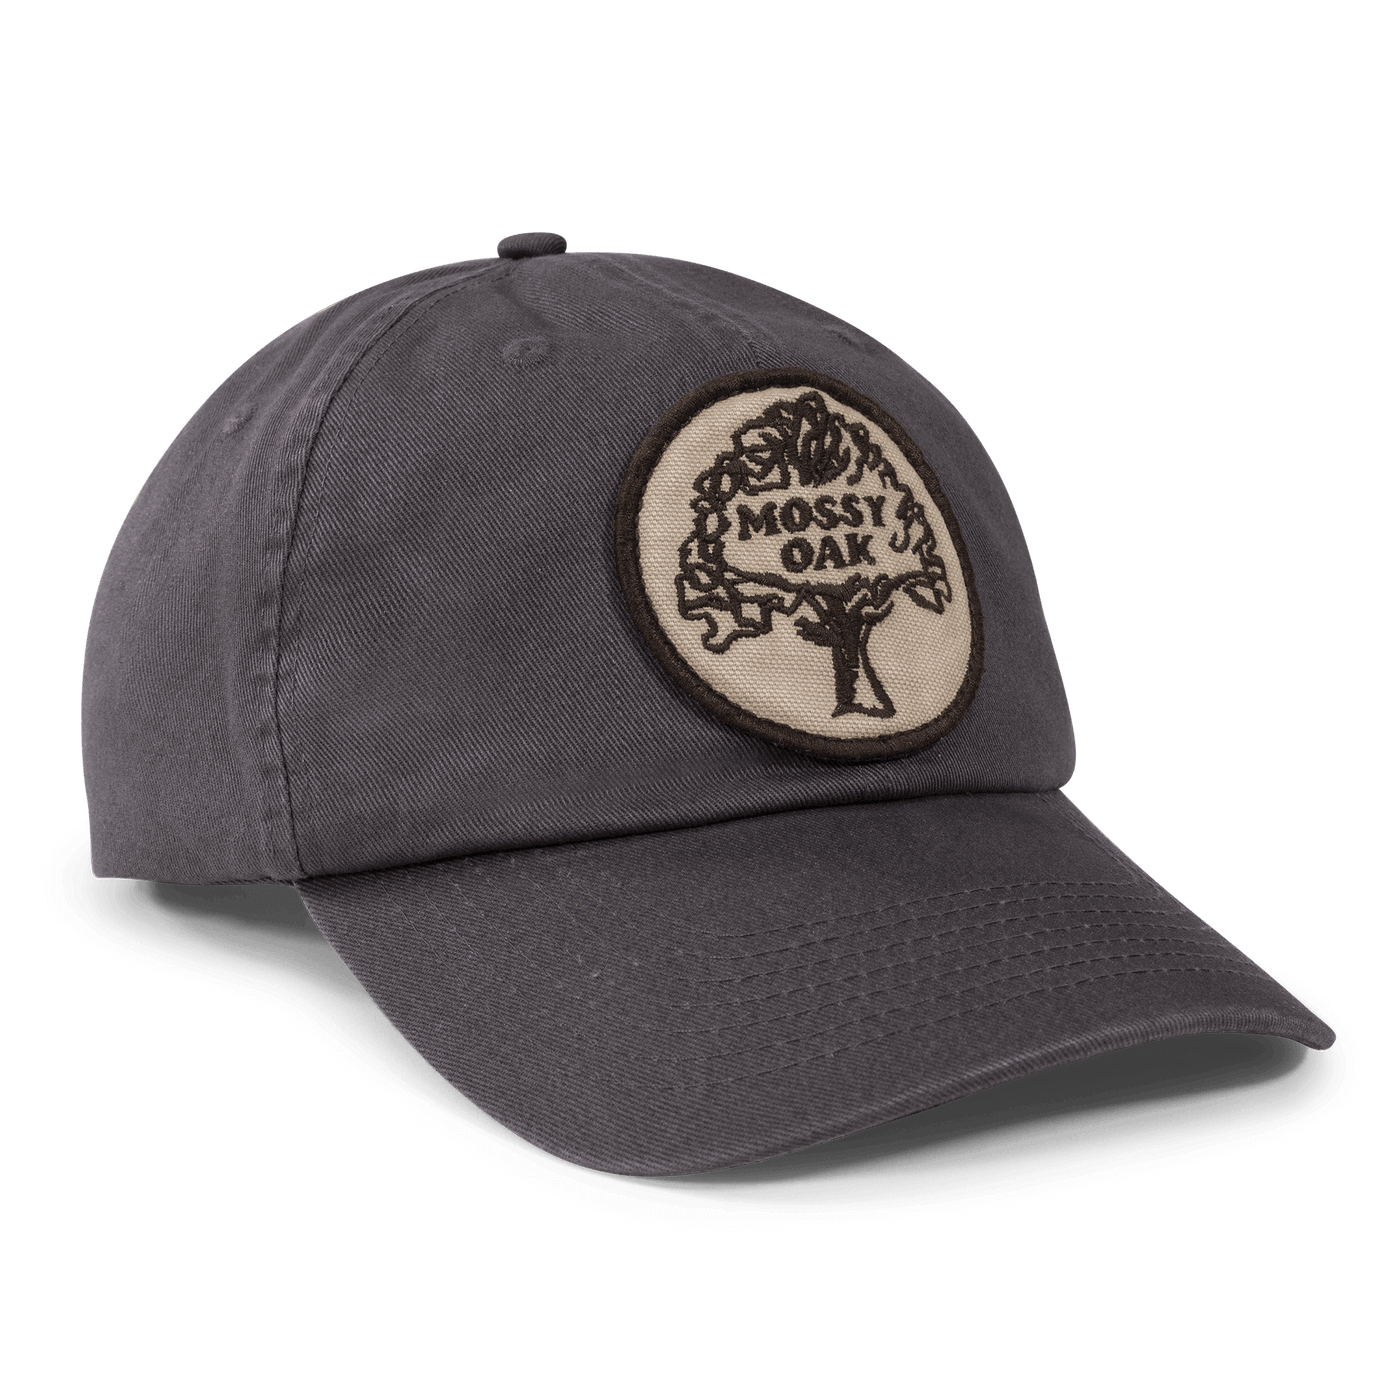 Vintage 6-Panel Hat – The Mossy Oak Store